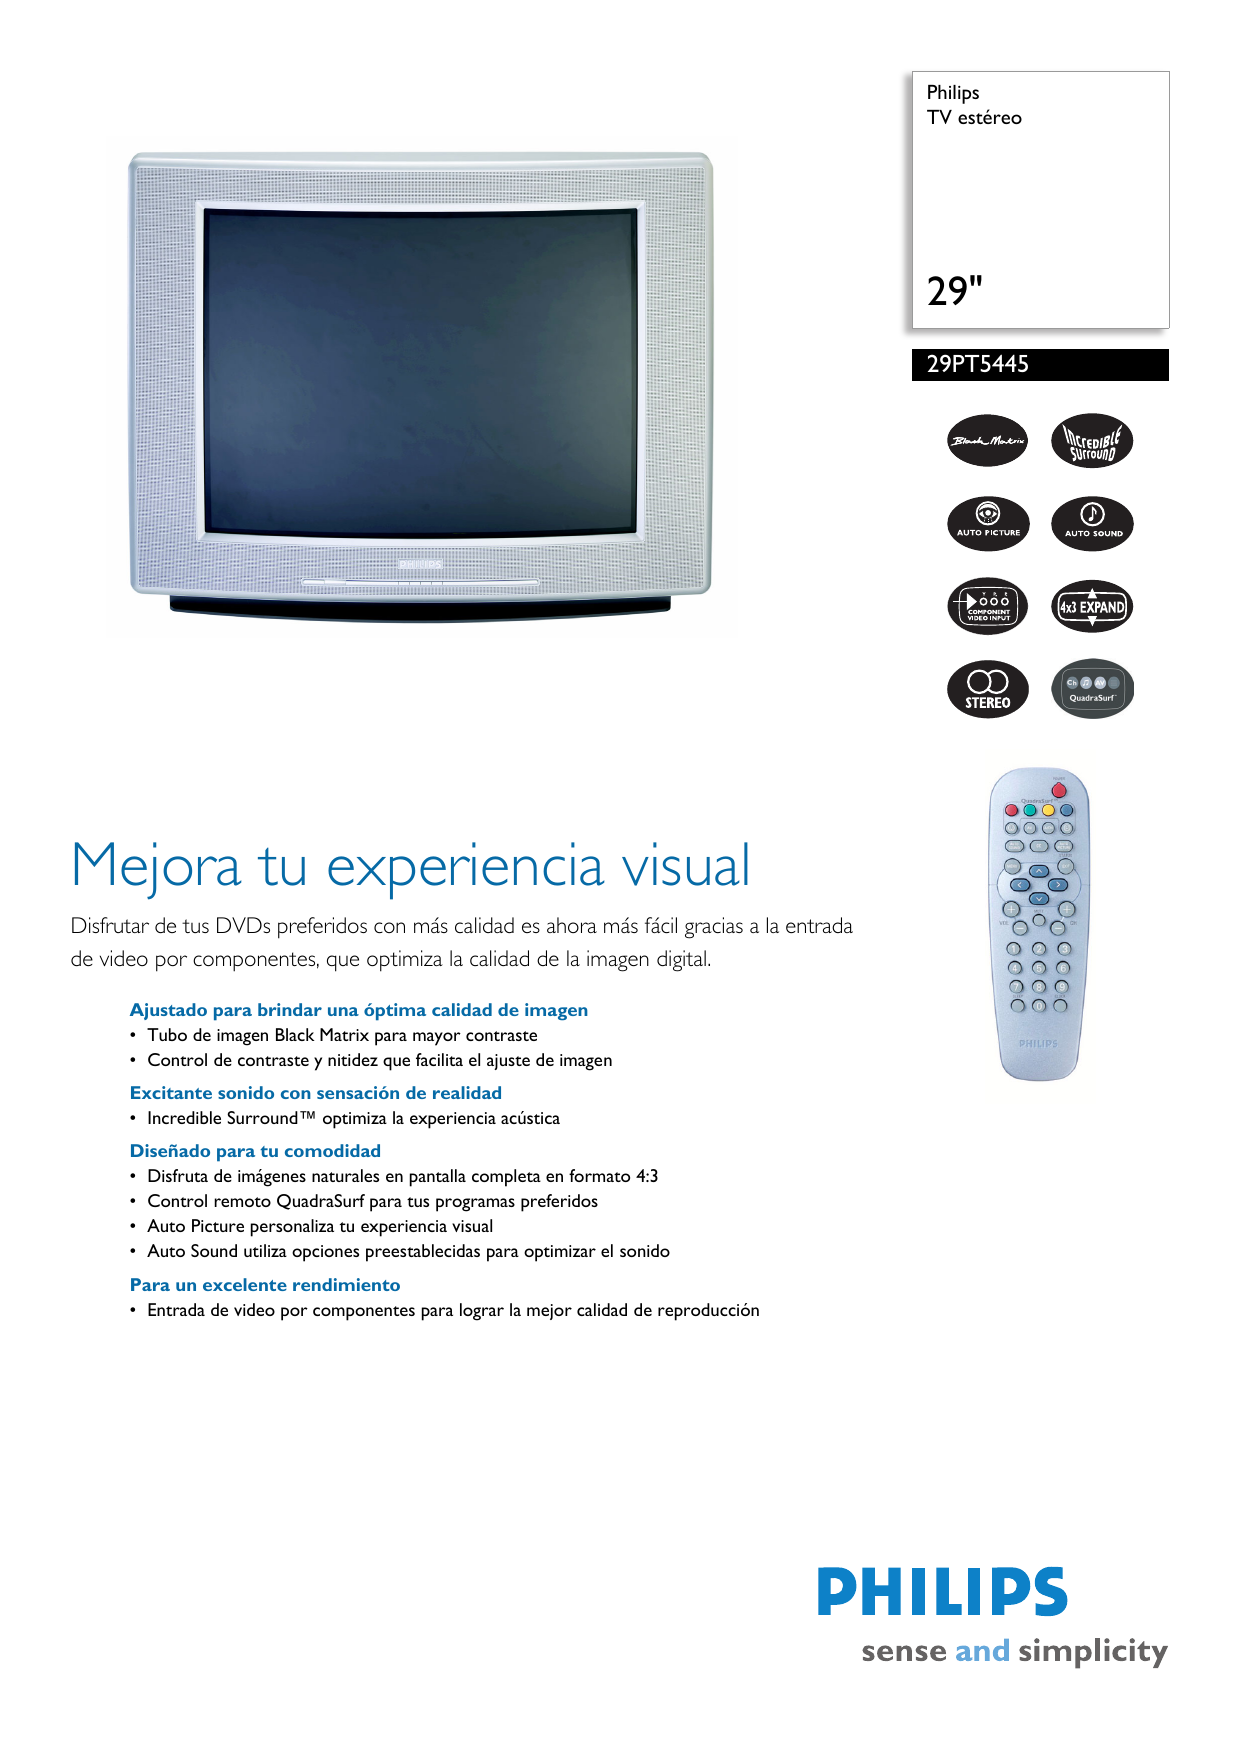 Flat TV panorámico 42PFL5332/45